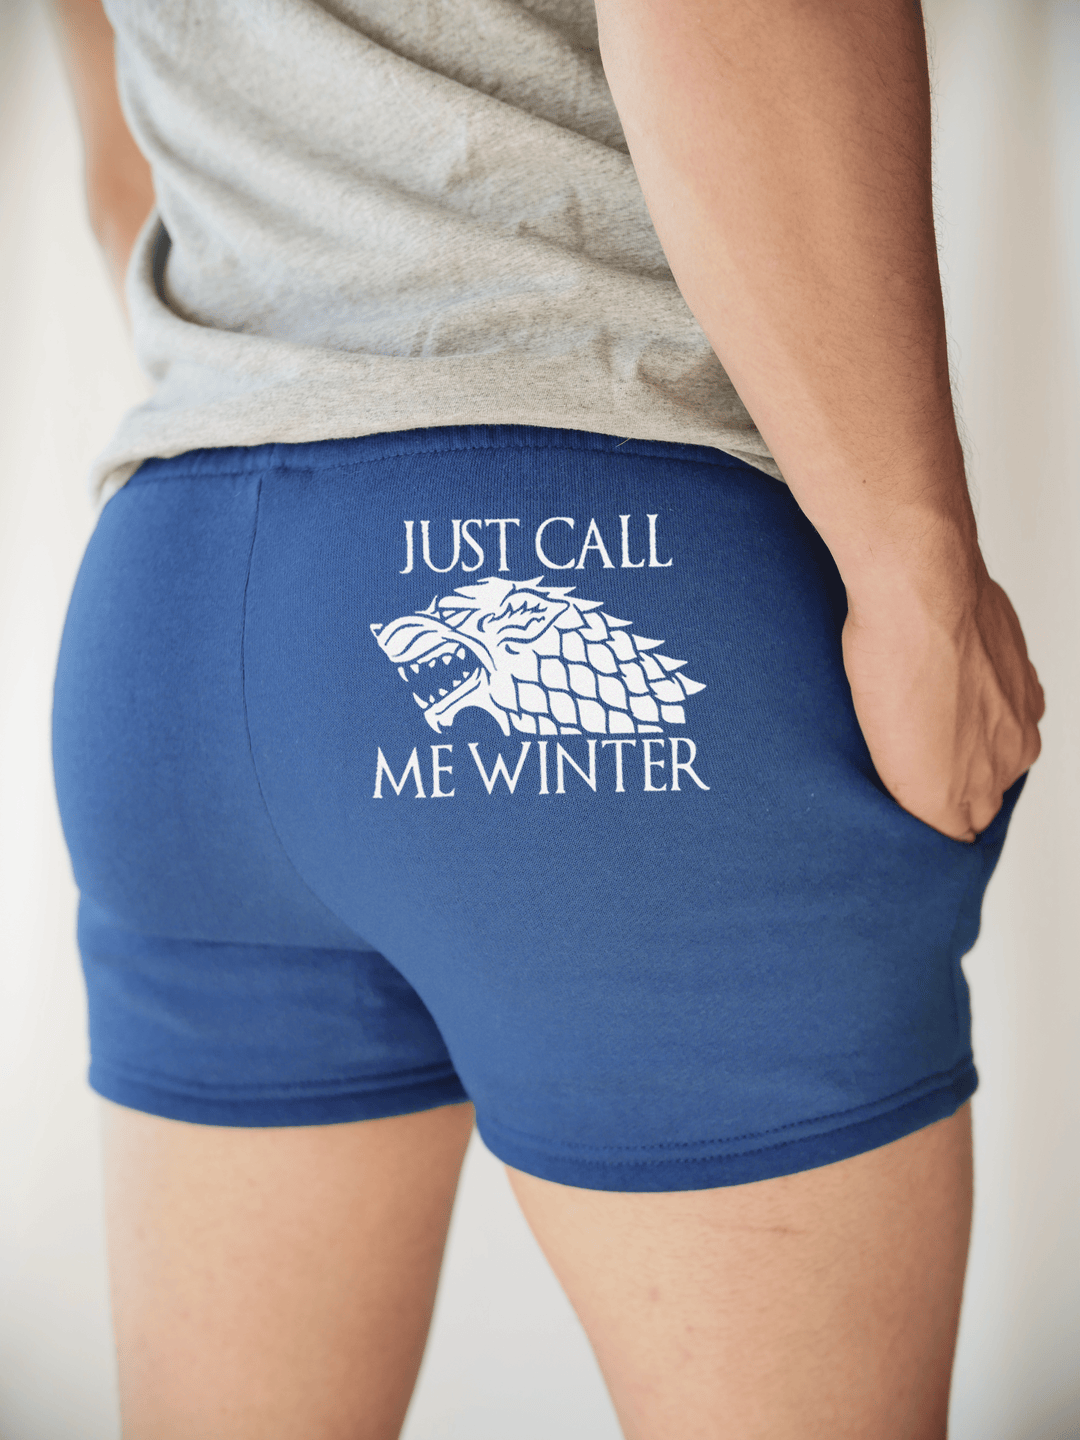 PixelThat Punderwear Shorts Royal Blue / S / Back Just Call Me Winter Men's Gym Shorts